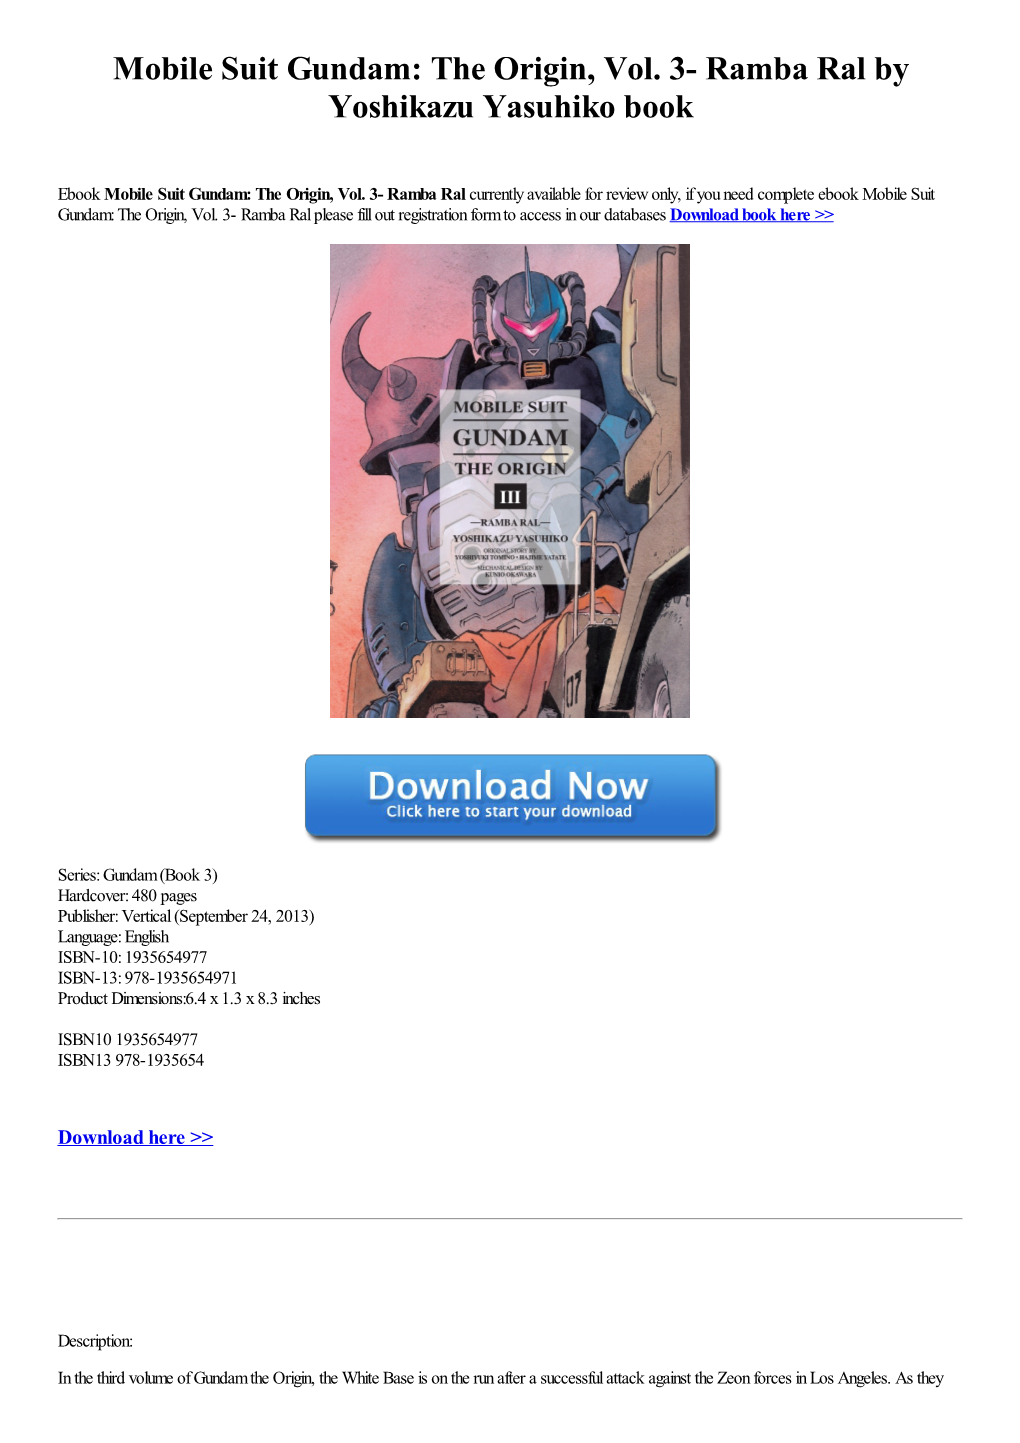 Mobile Suit Gundam: the Origin, Vol. 3- Ramba Ral by Yoshikazu Yasuhiko Book